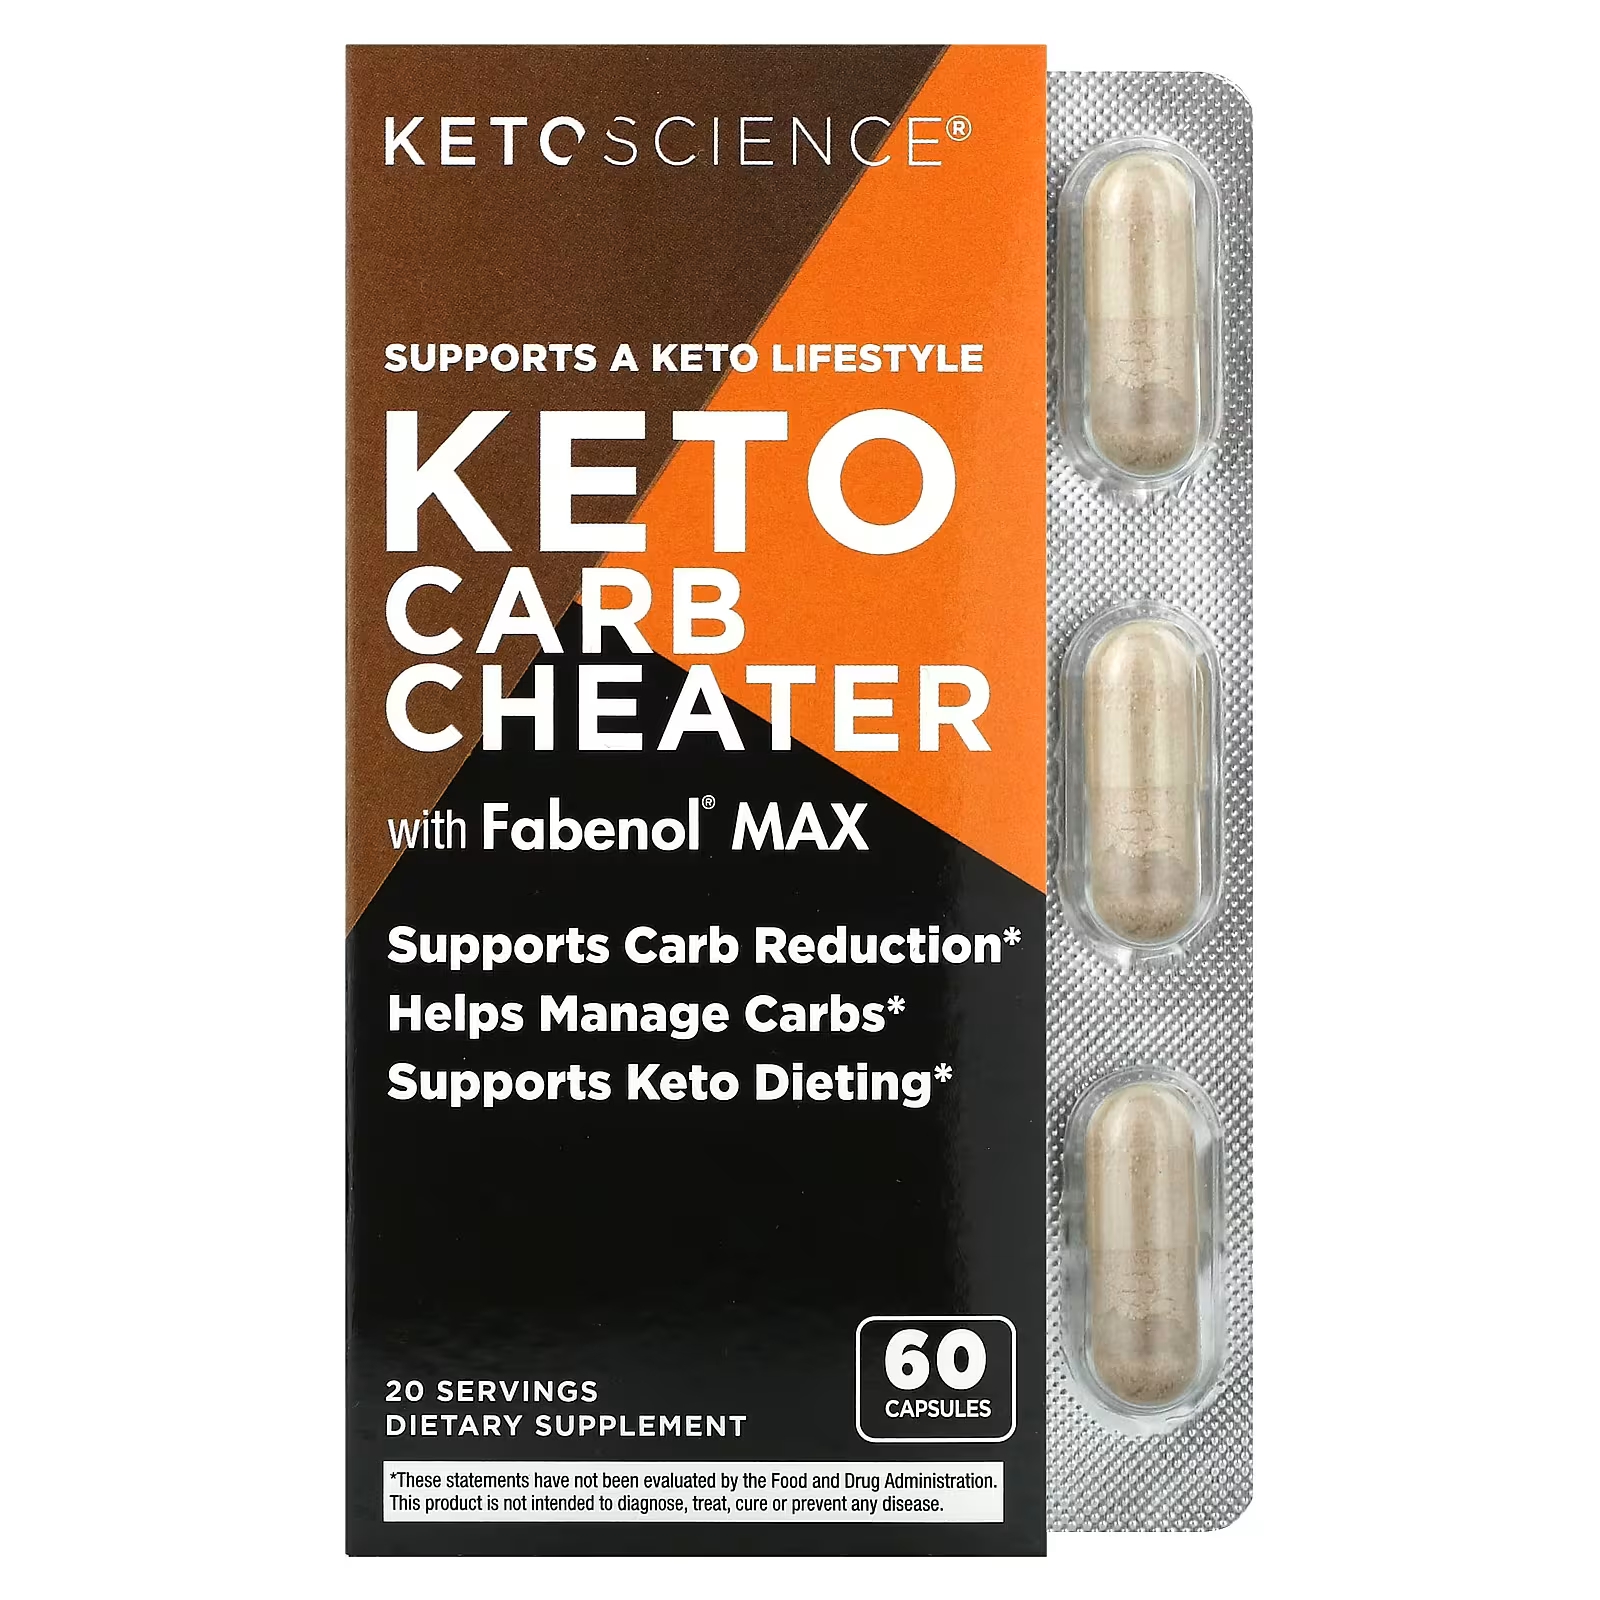 Пищевая добавка Keto Science Keto Carb Cheater & Fabenol Max, 60 капсул carb